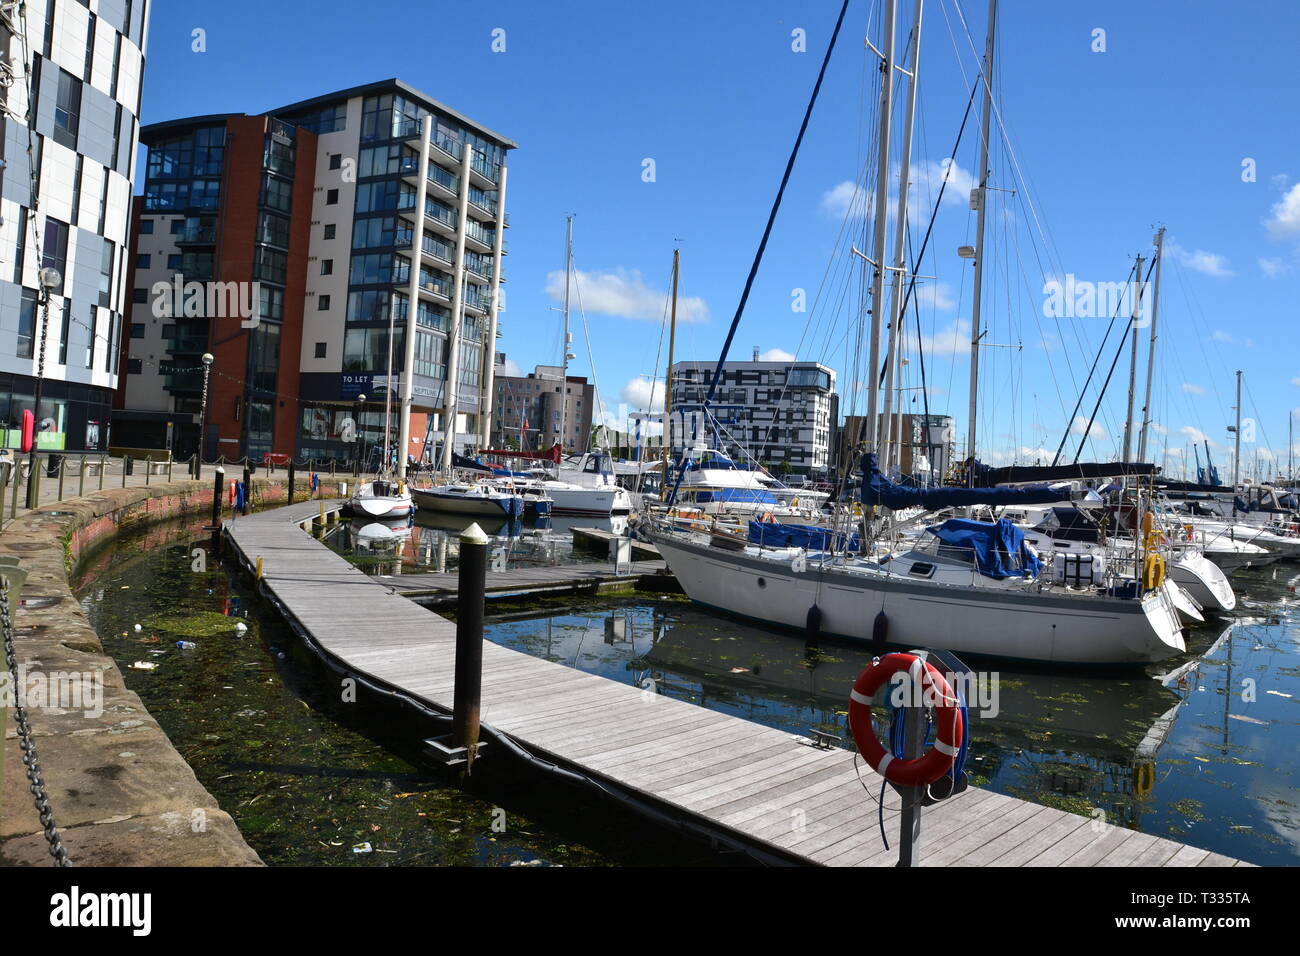 Ipswich Waterfront, also known as Ipswich Wet Dock, Ipswich Docks, or Ipswich Marina, in the sunshine. Suffolk, UK Stock Photo